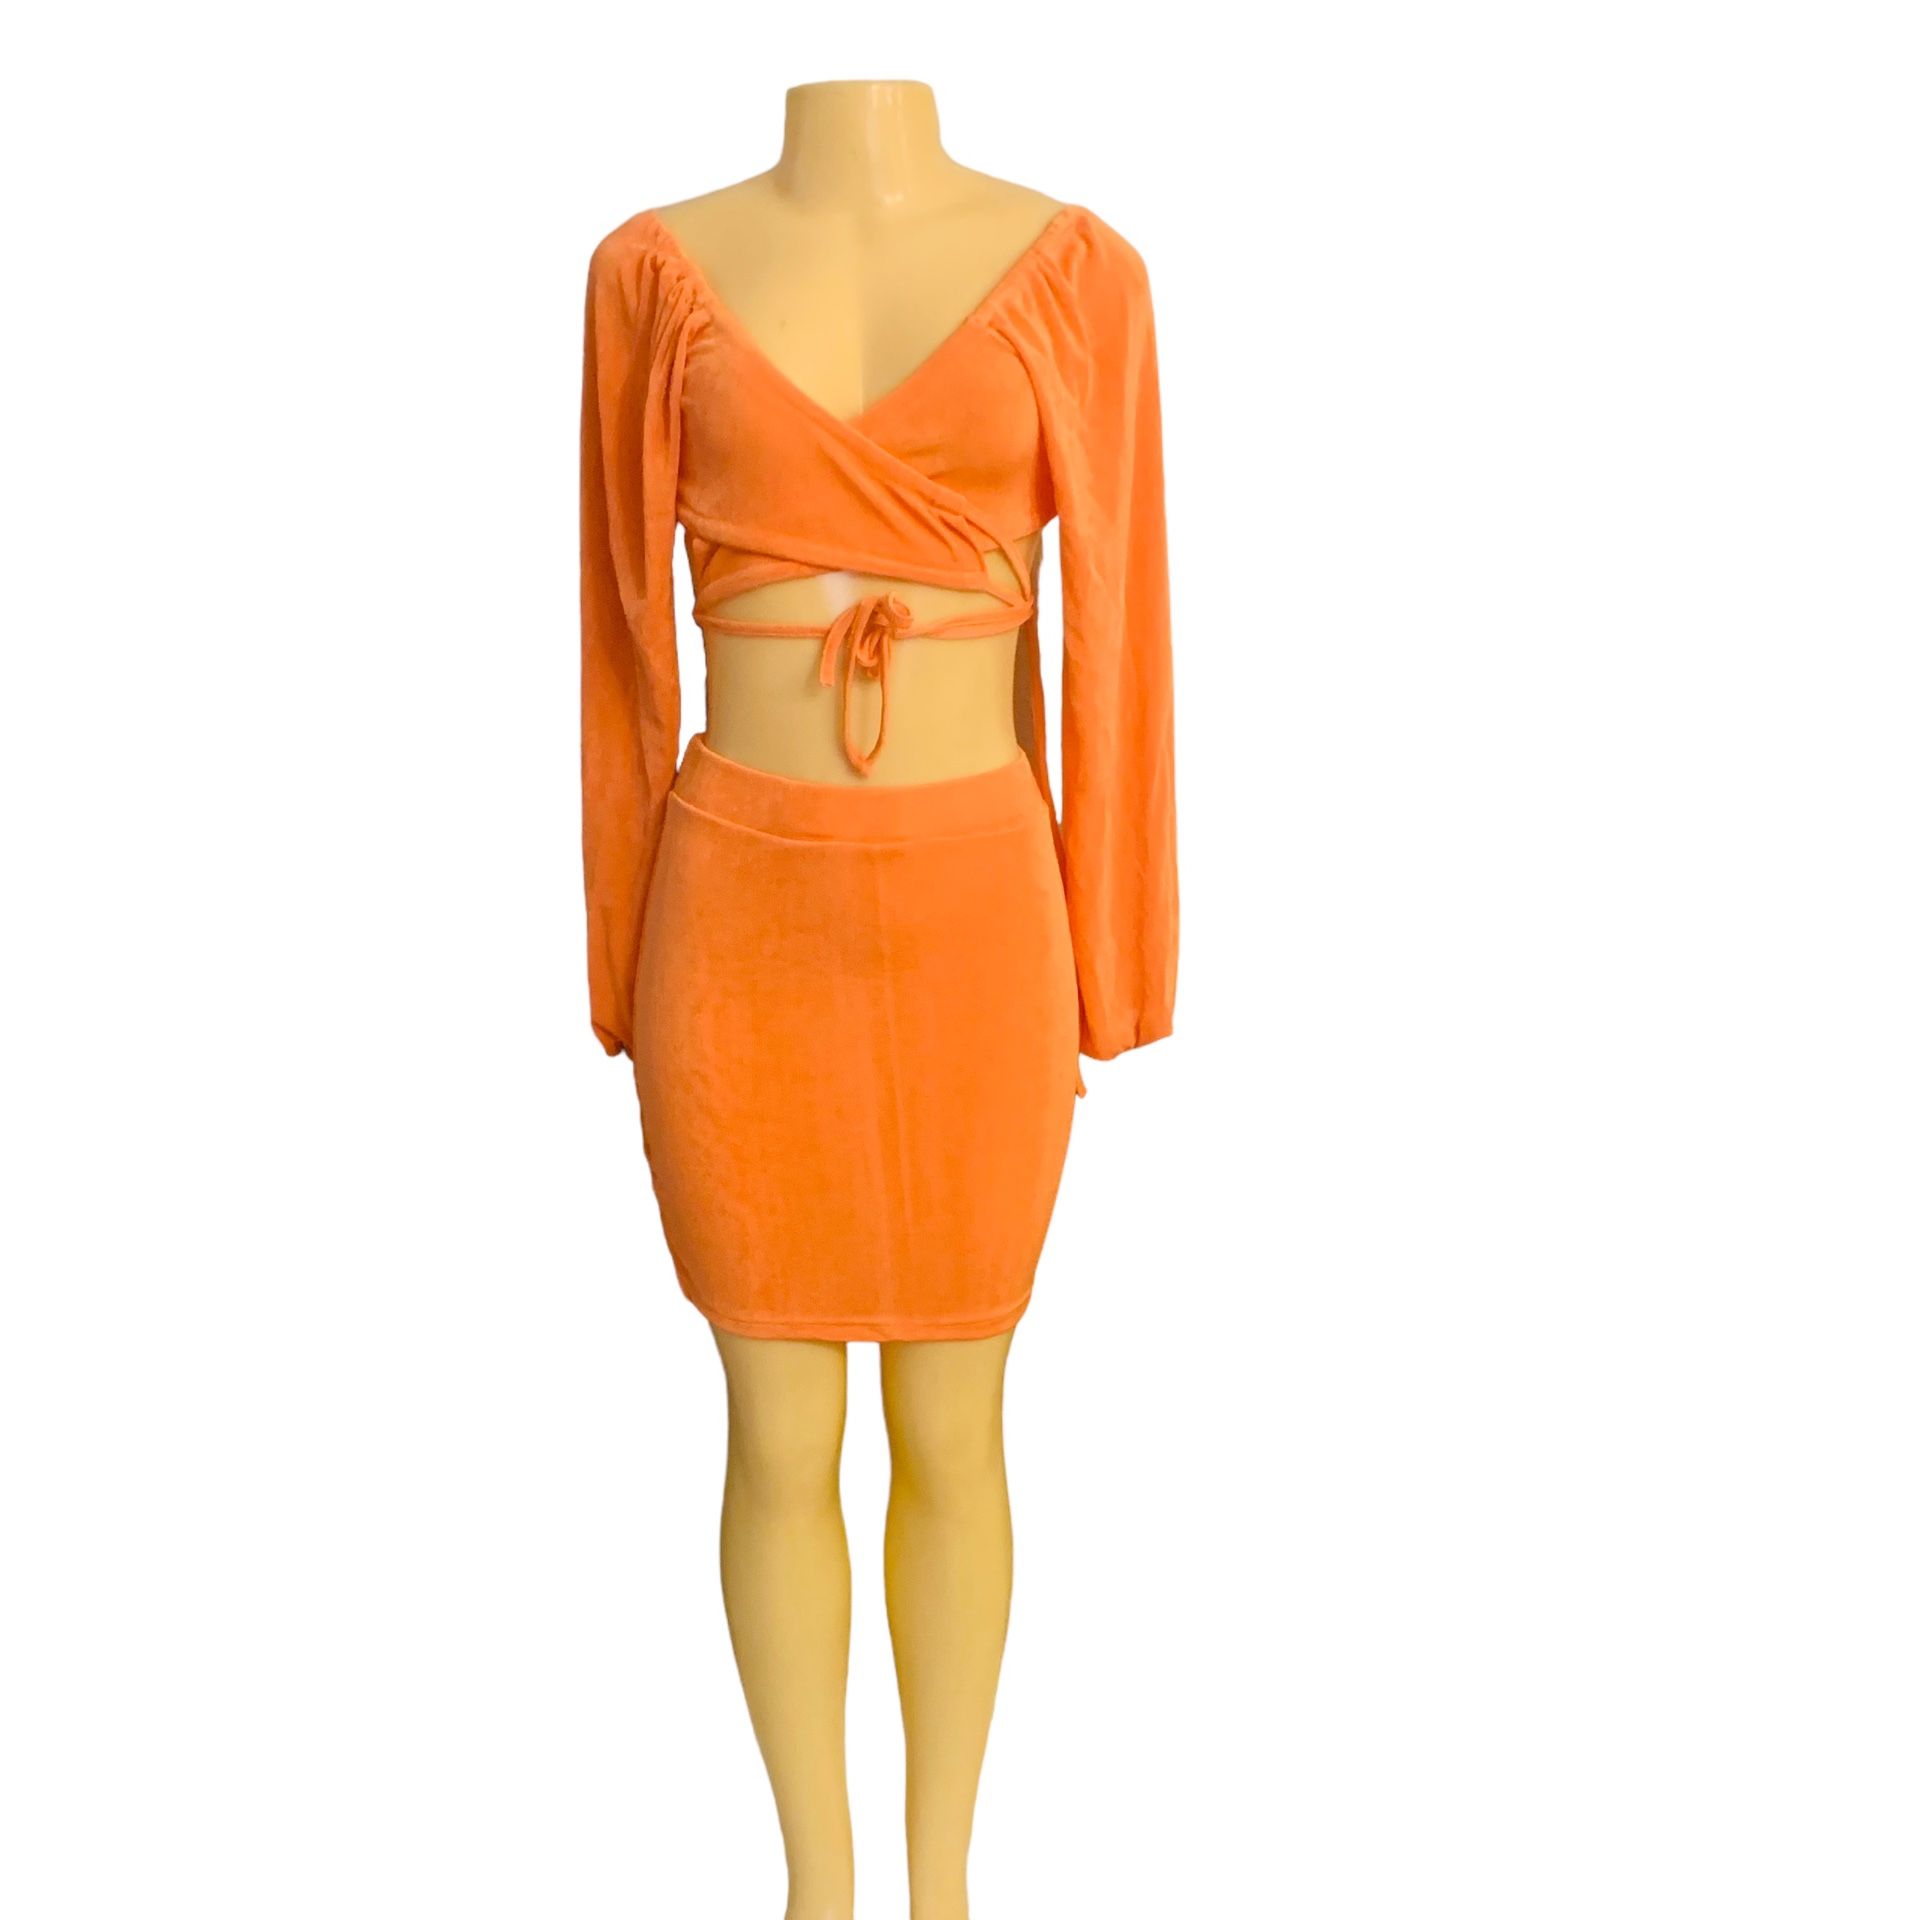 Calebgar Sz S Women 2 Piece Half Top And Skirt Orange